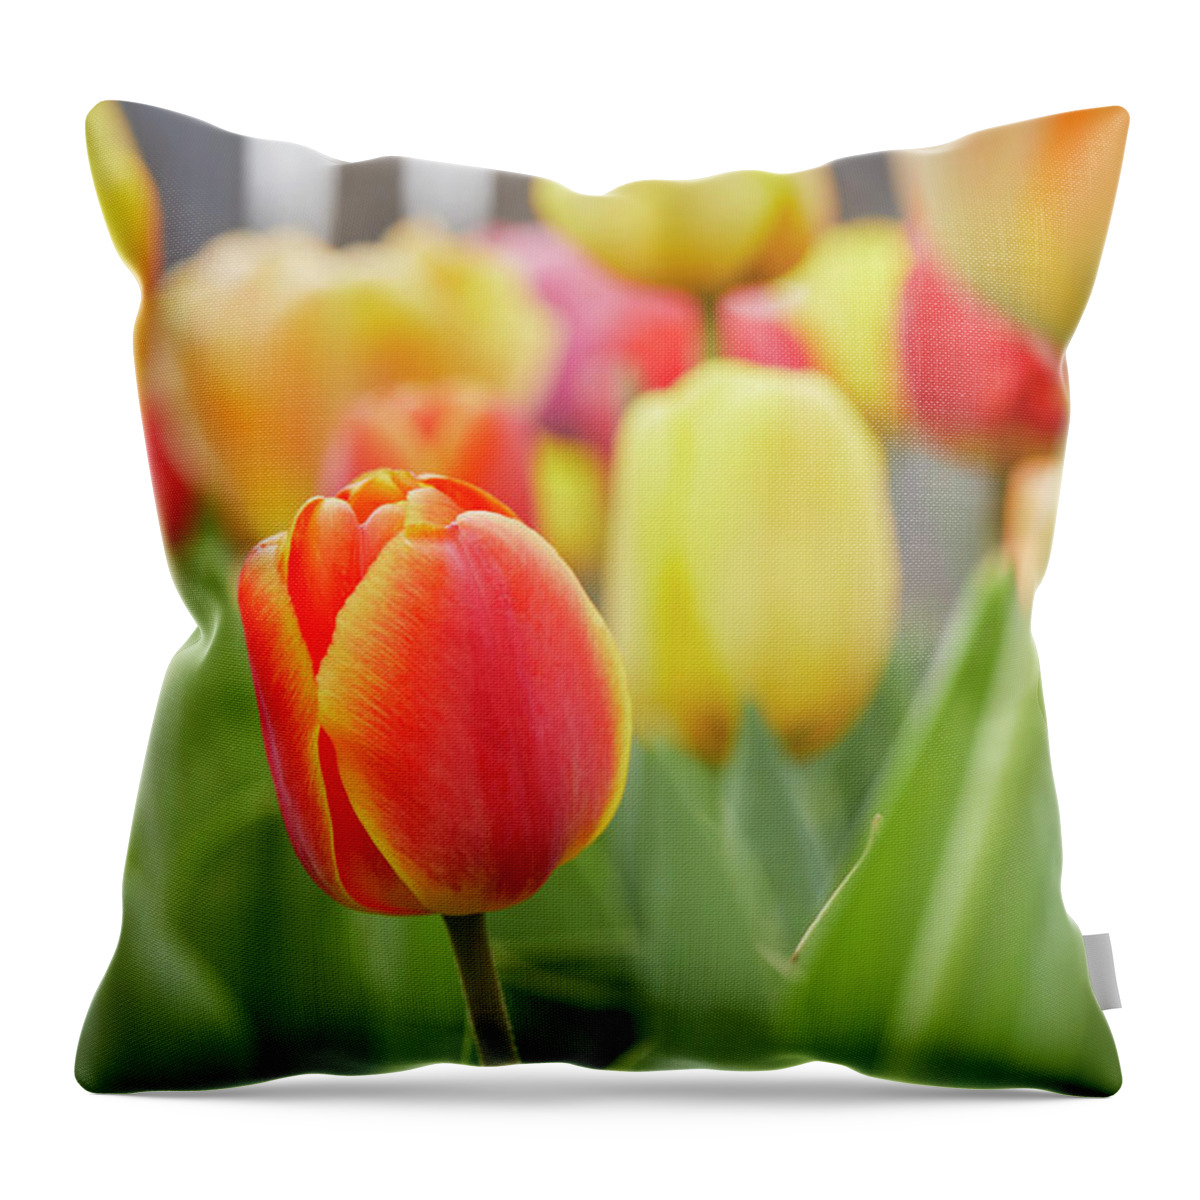 Garden Gate Throw Pillow featuring the photograph Tulips by Garden Gate magazine